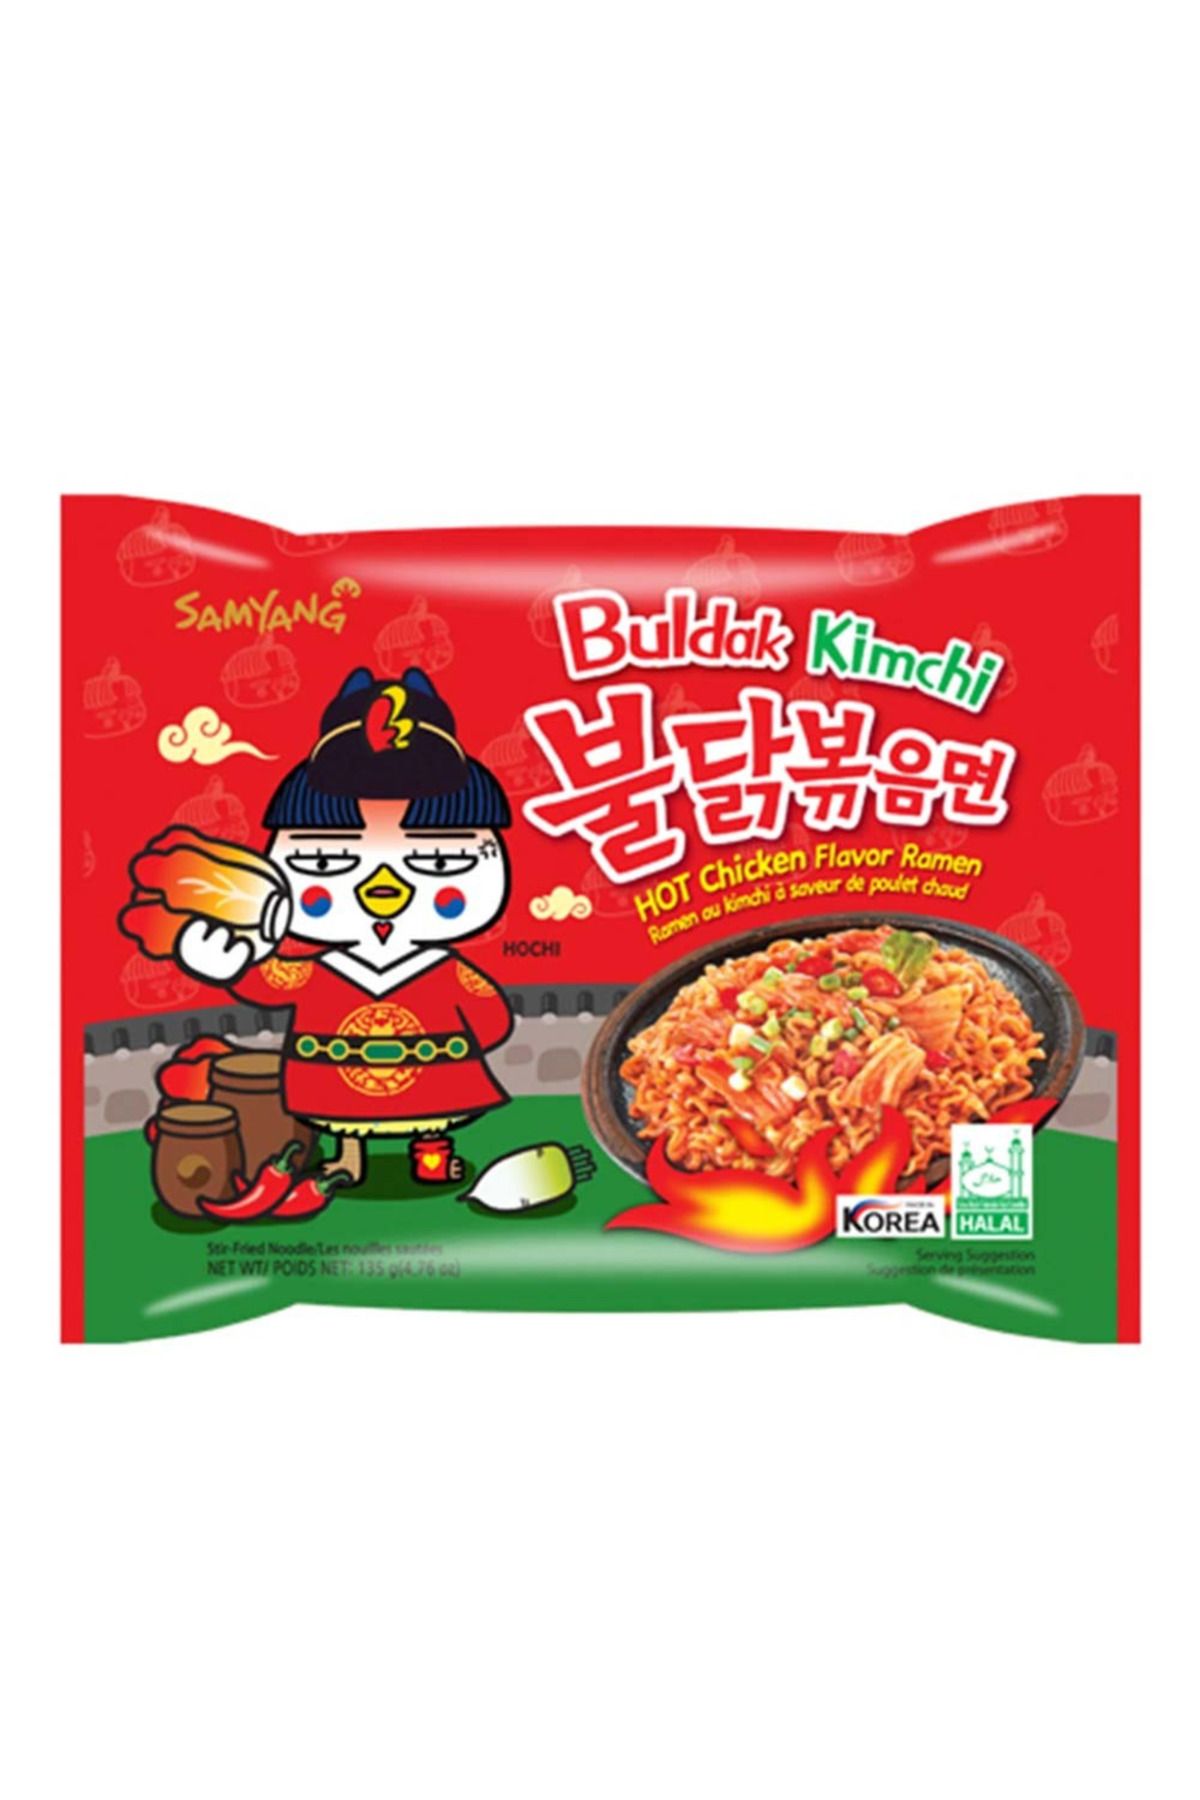 samyang Buldak Kimchi Hot Chicken Flavor Ramen Kore,140g